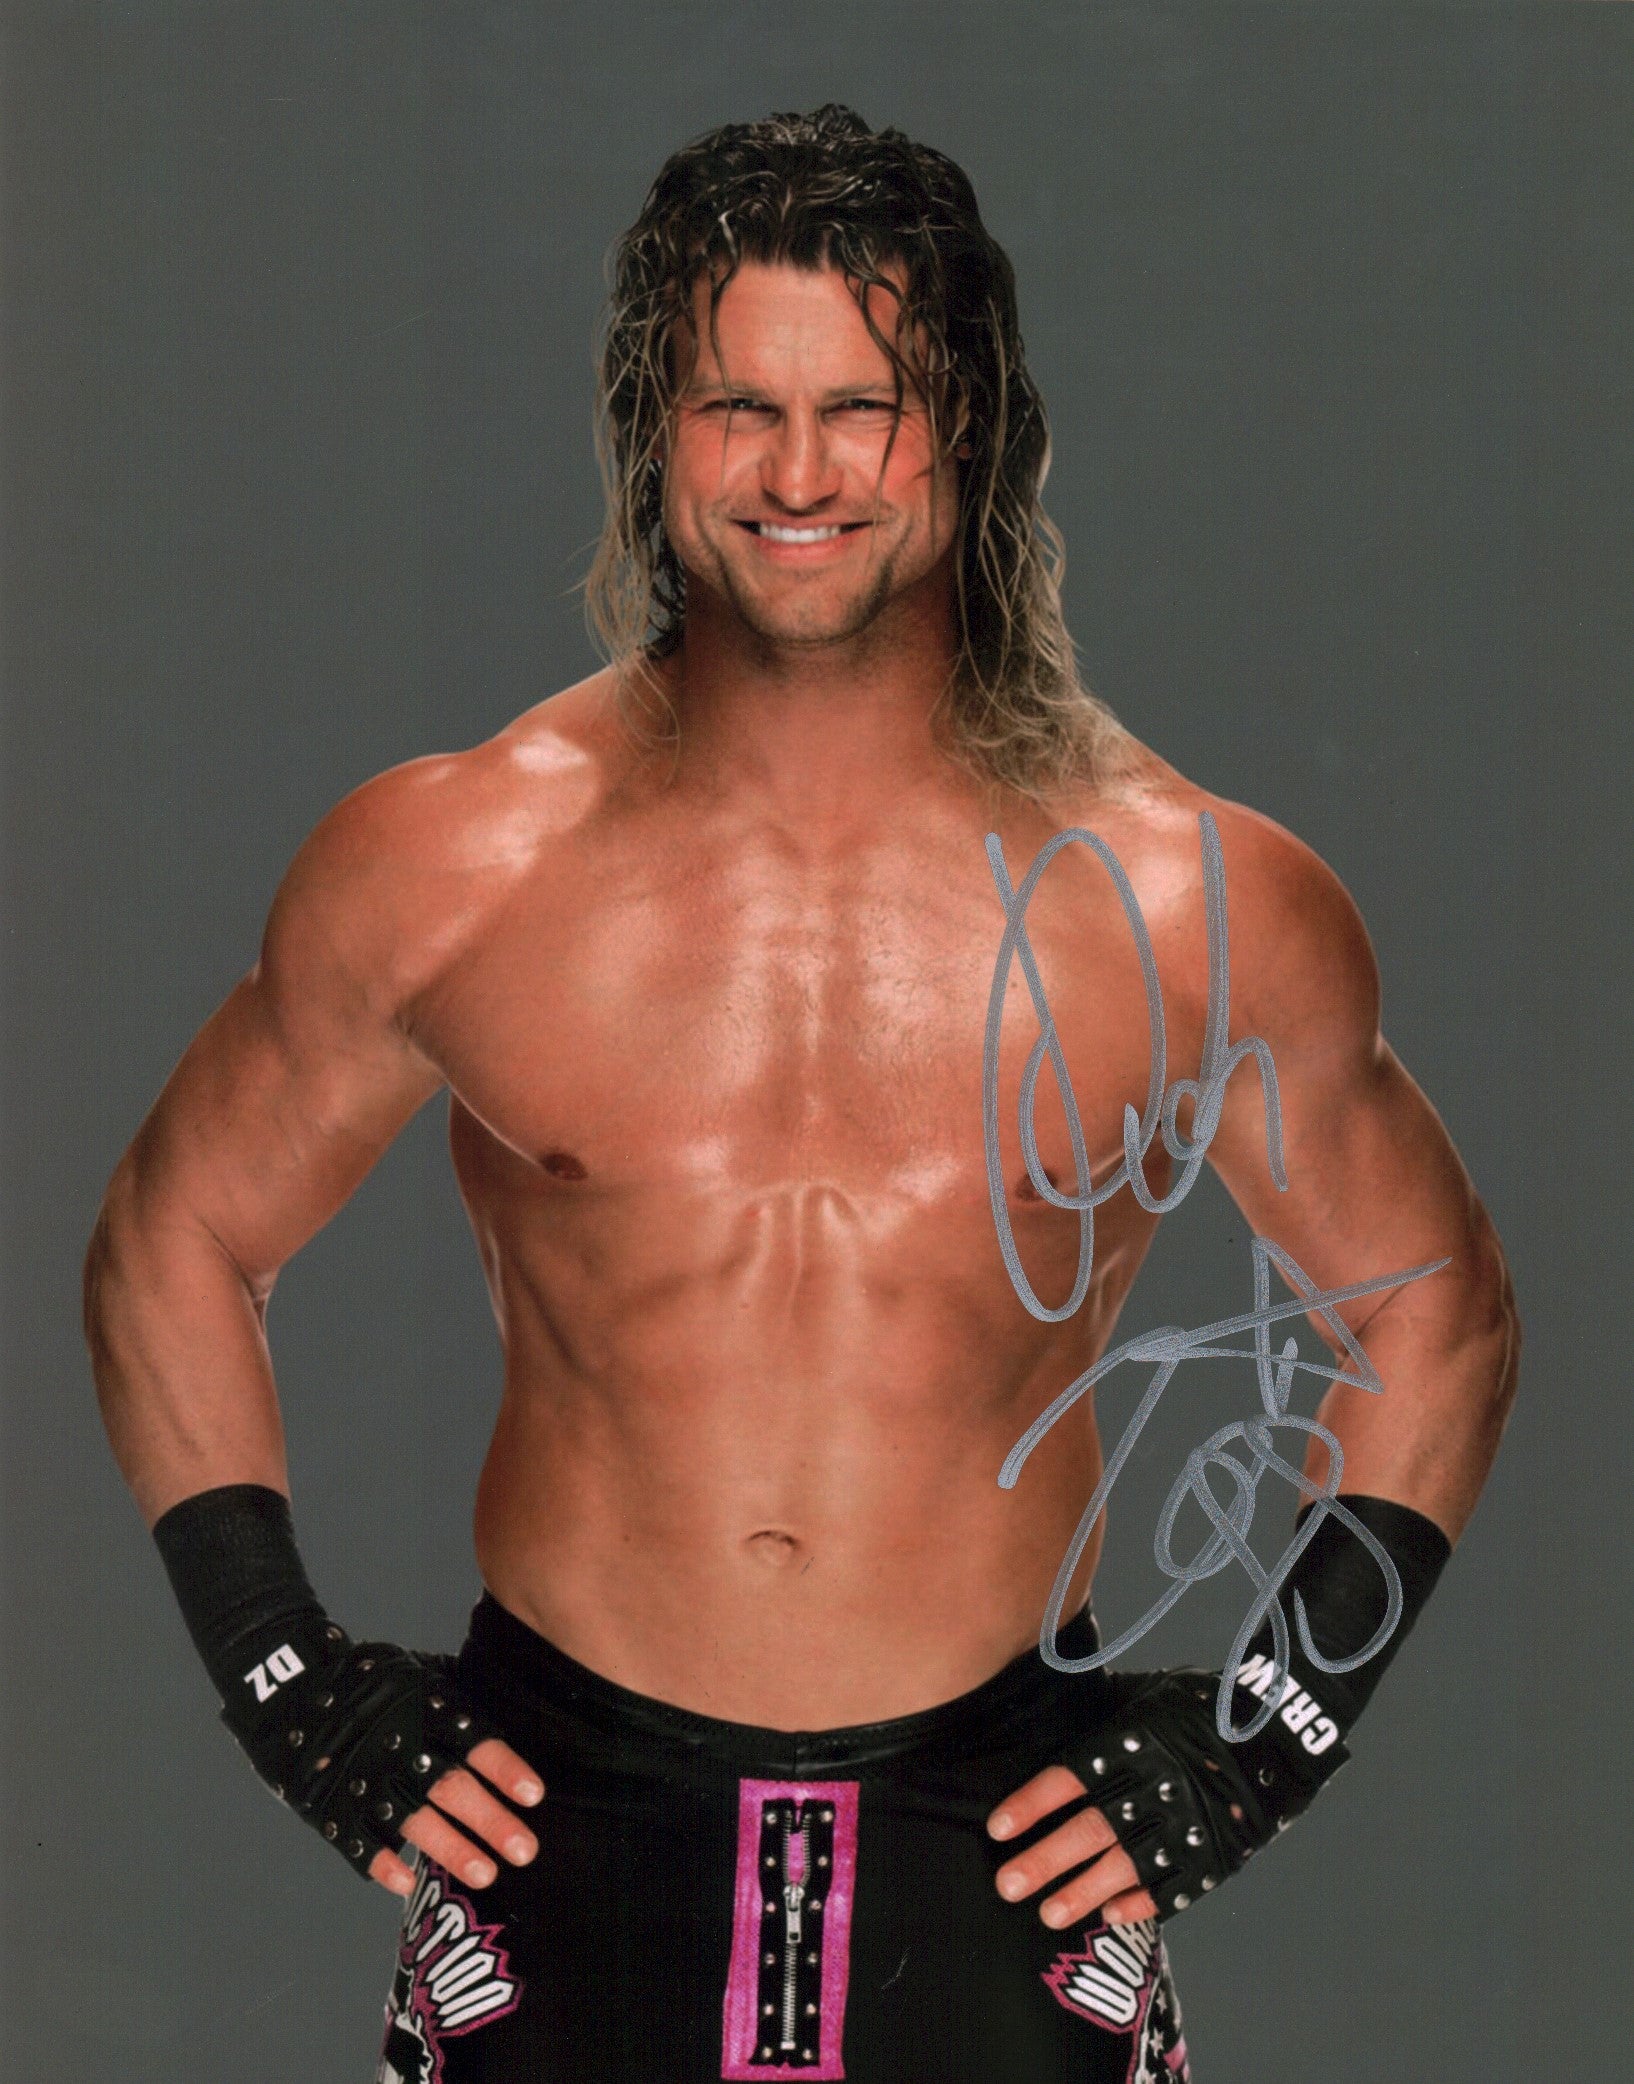 Dolph Ziggler WWE Wrestling 11x14 Signed Photo Poster JSA Certified Autograph